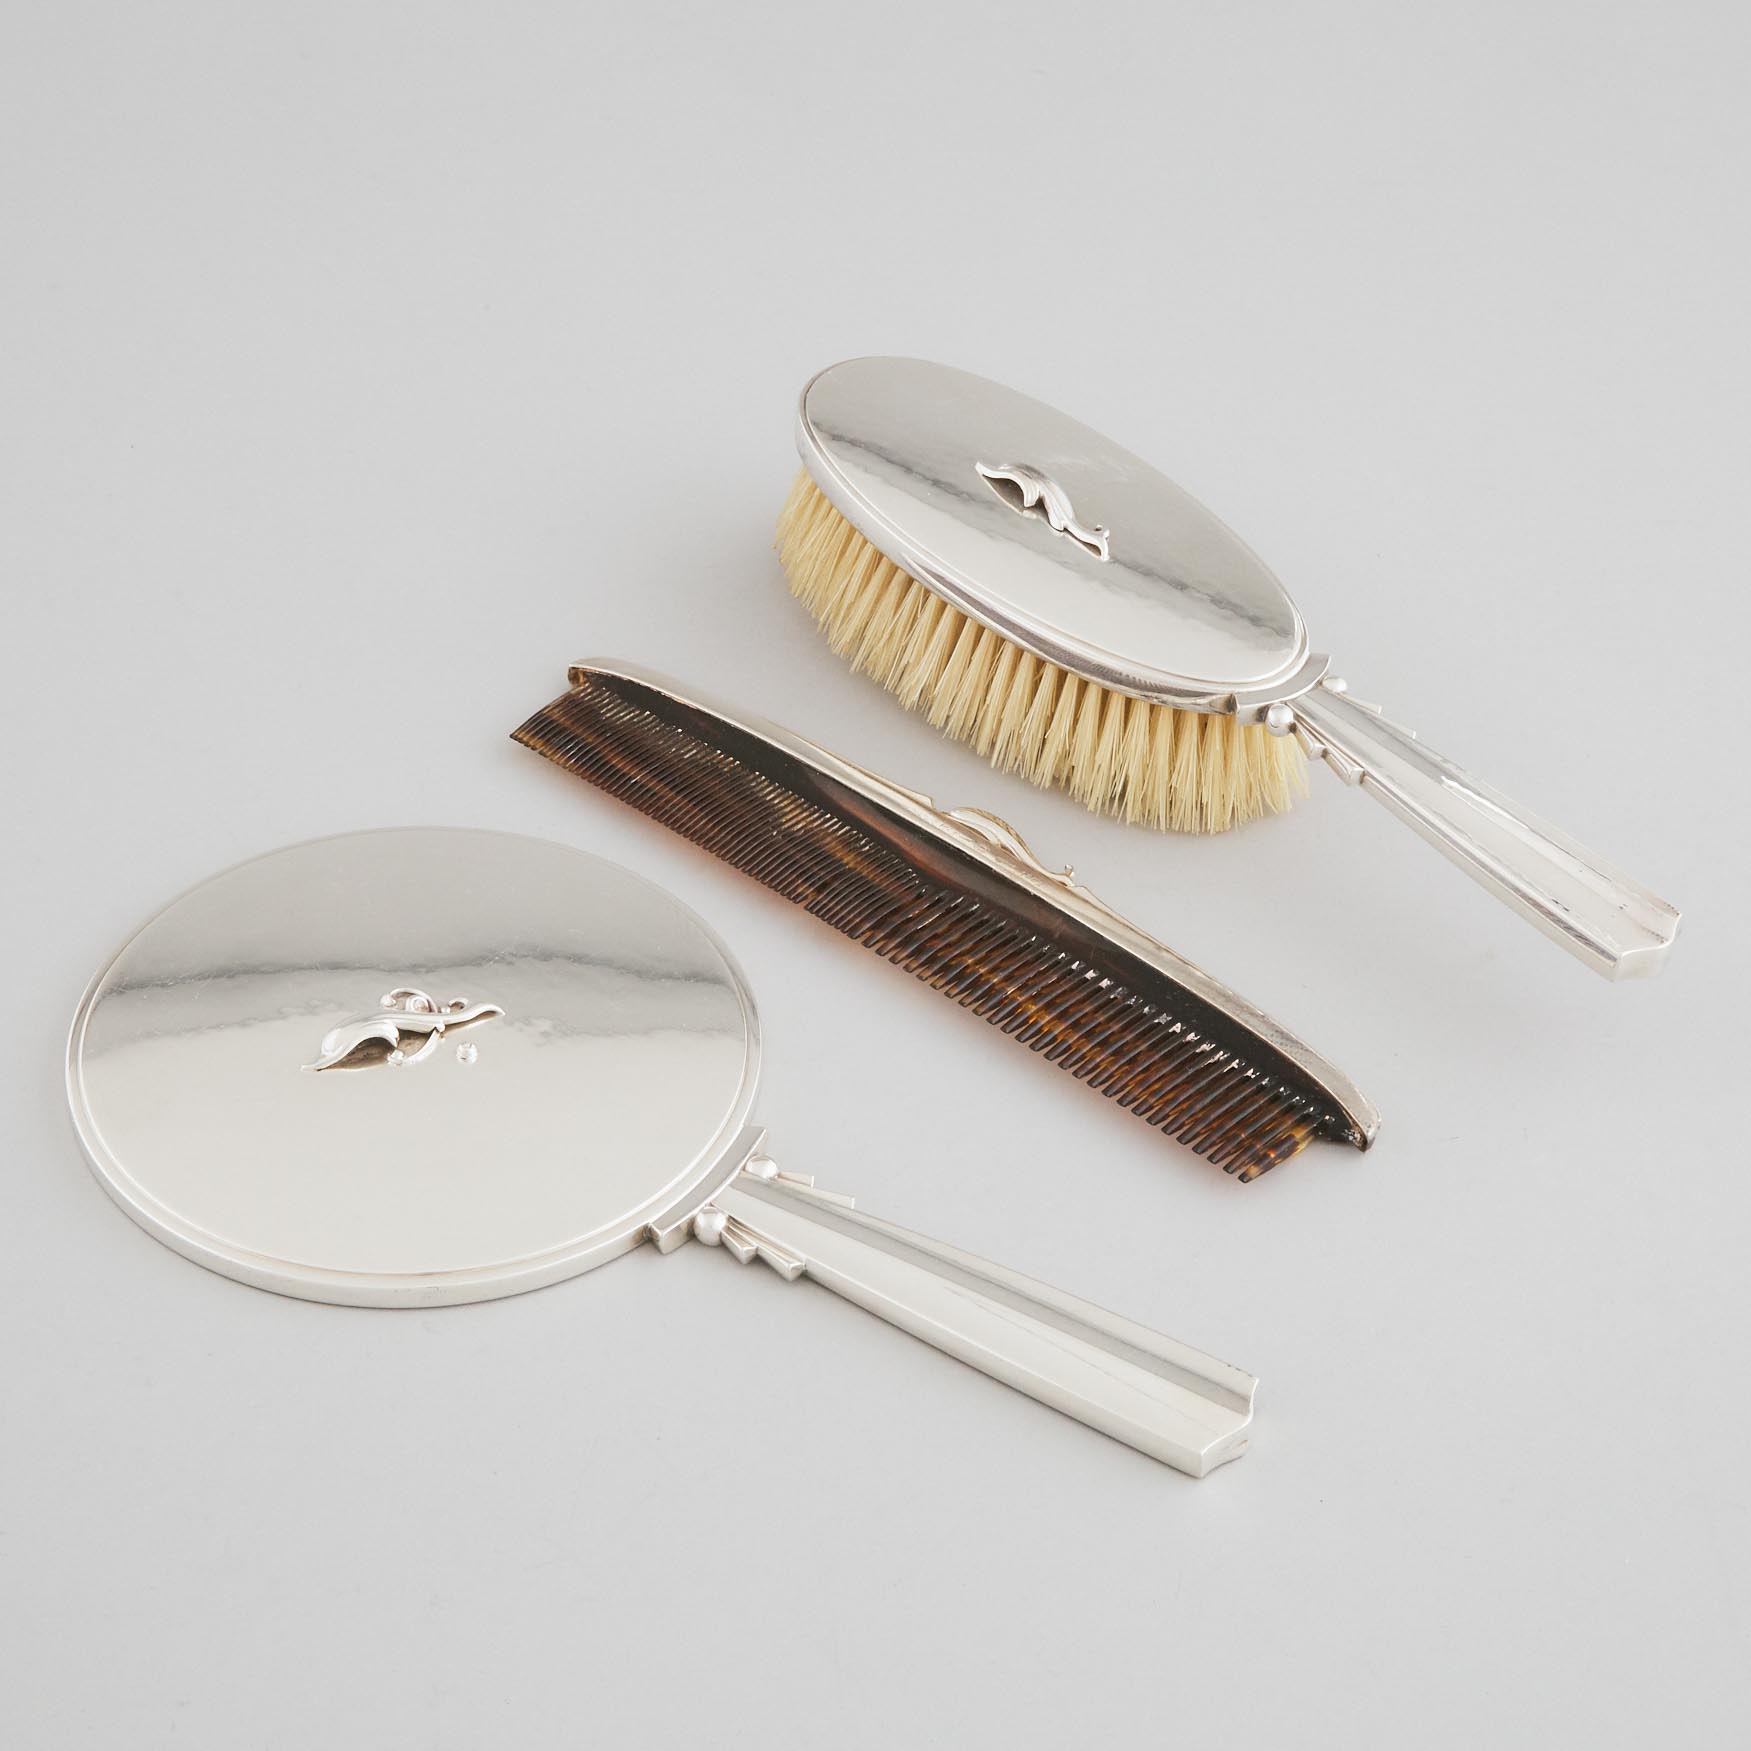 Danish Silver Mounted Hand Mirror, Hair Brush and Comb, #150A, Harald Nielsen for Georg Jensen, Copenhagen, post-1945